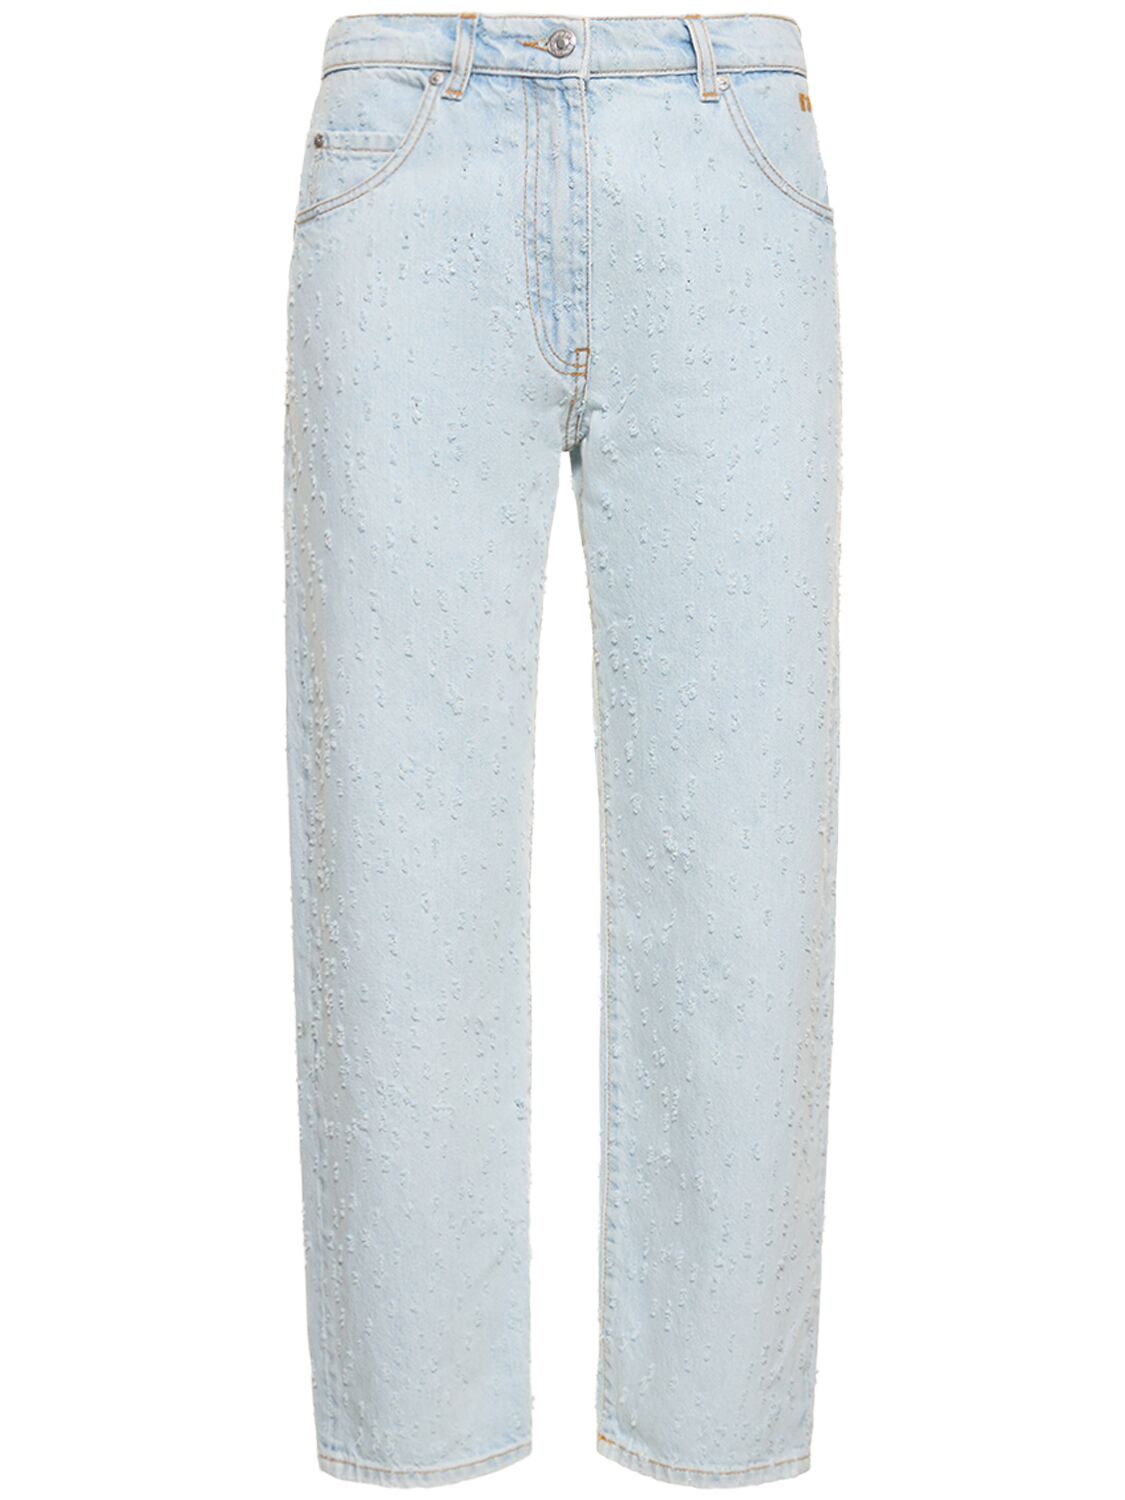 Image of Cotton Crop Jeans